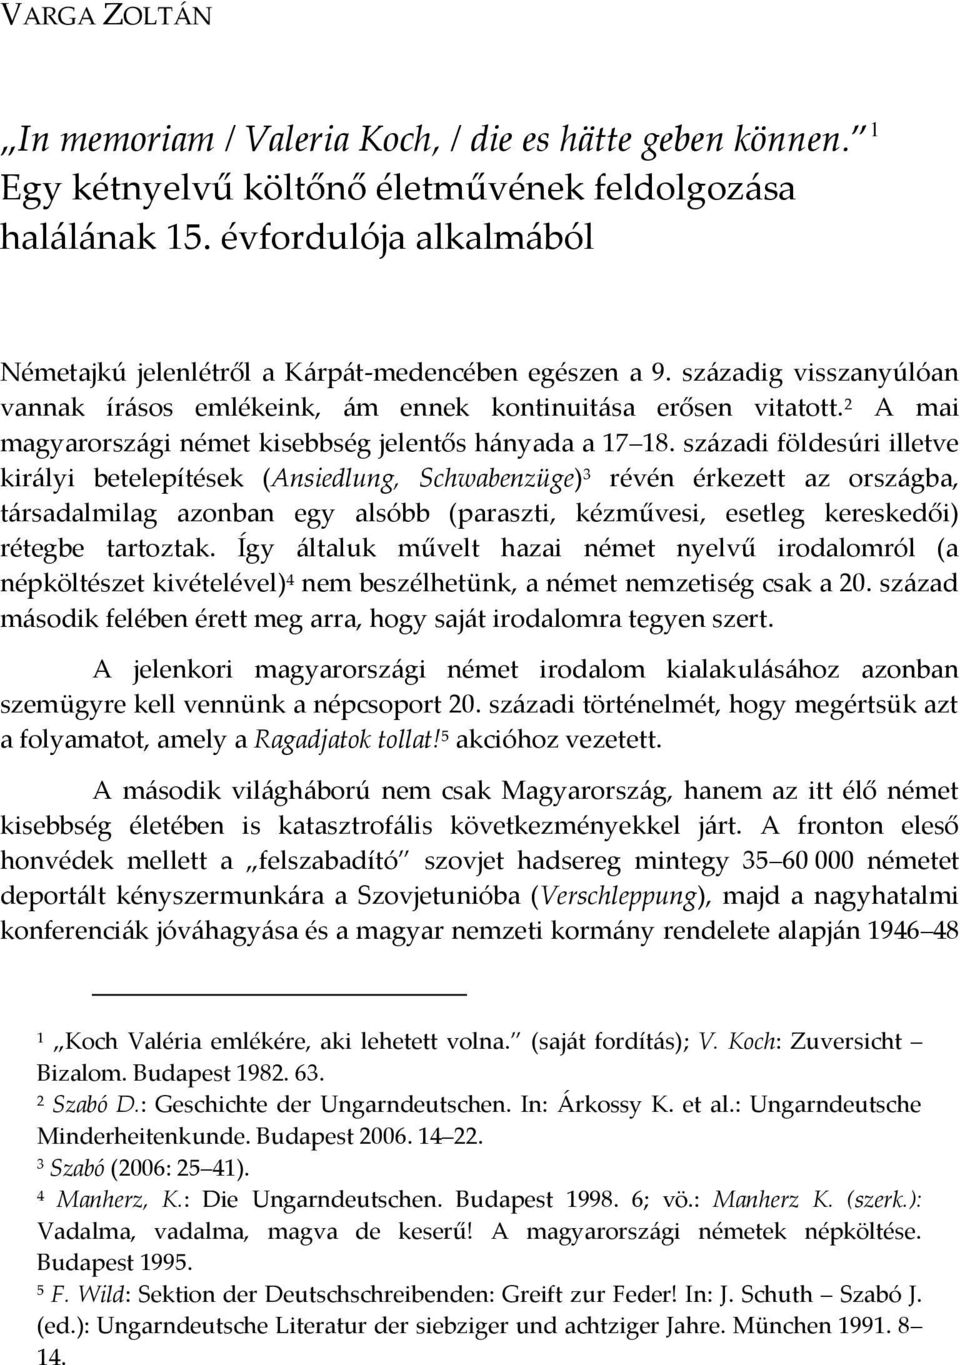 ACTA SZEGEDIENSIA COLLEGII DE ROLANDO EÖTVÖS NOMINATI 2. EÖTVÖZET II. - PDF  Free Download